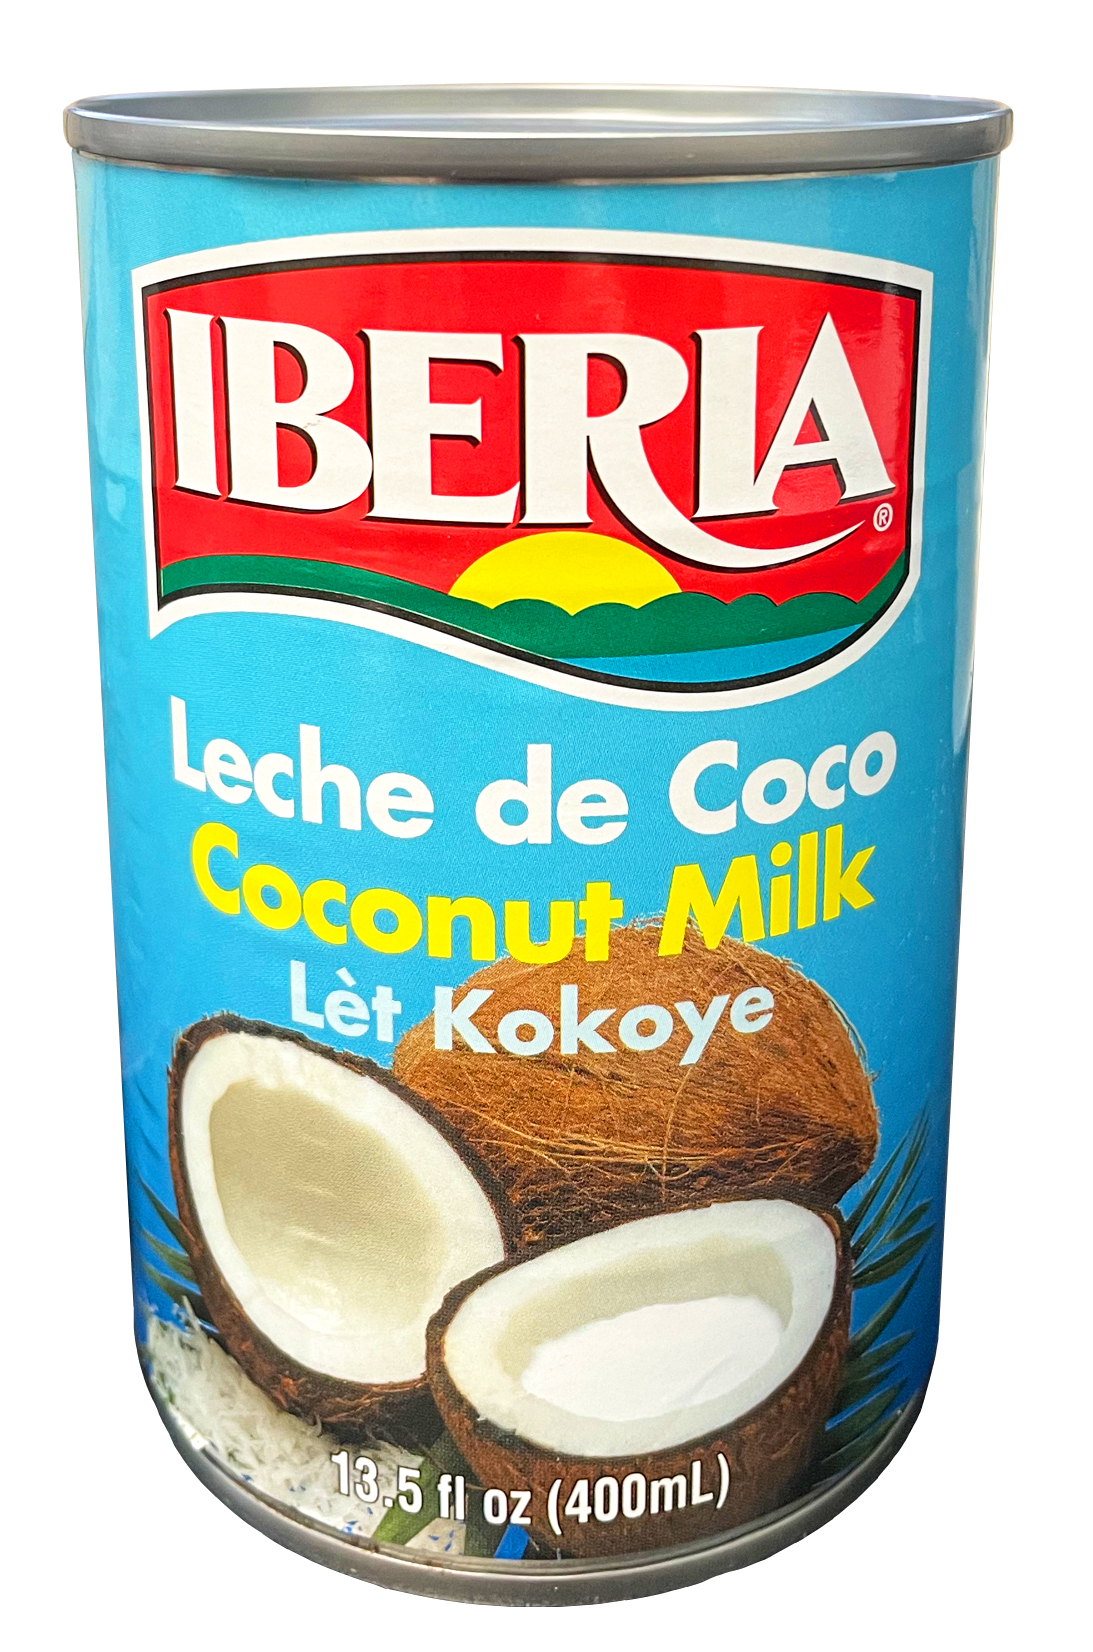 Iberia Coconut Milk, 13.5 fl oz - image 1 of 3